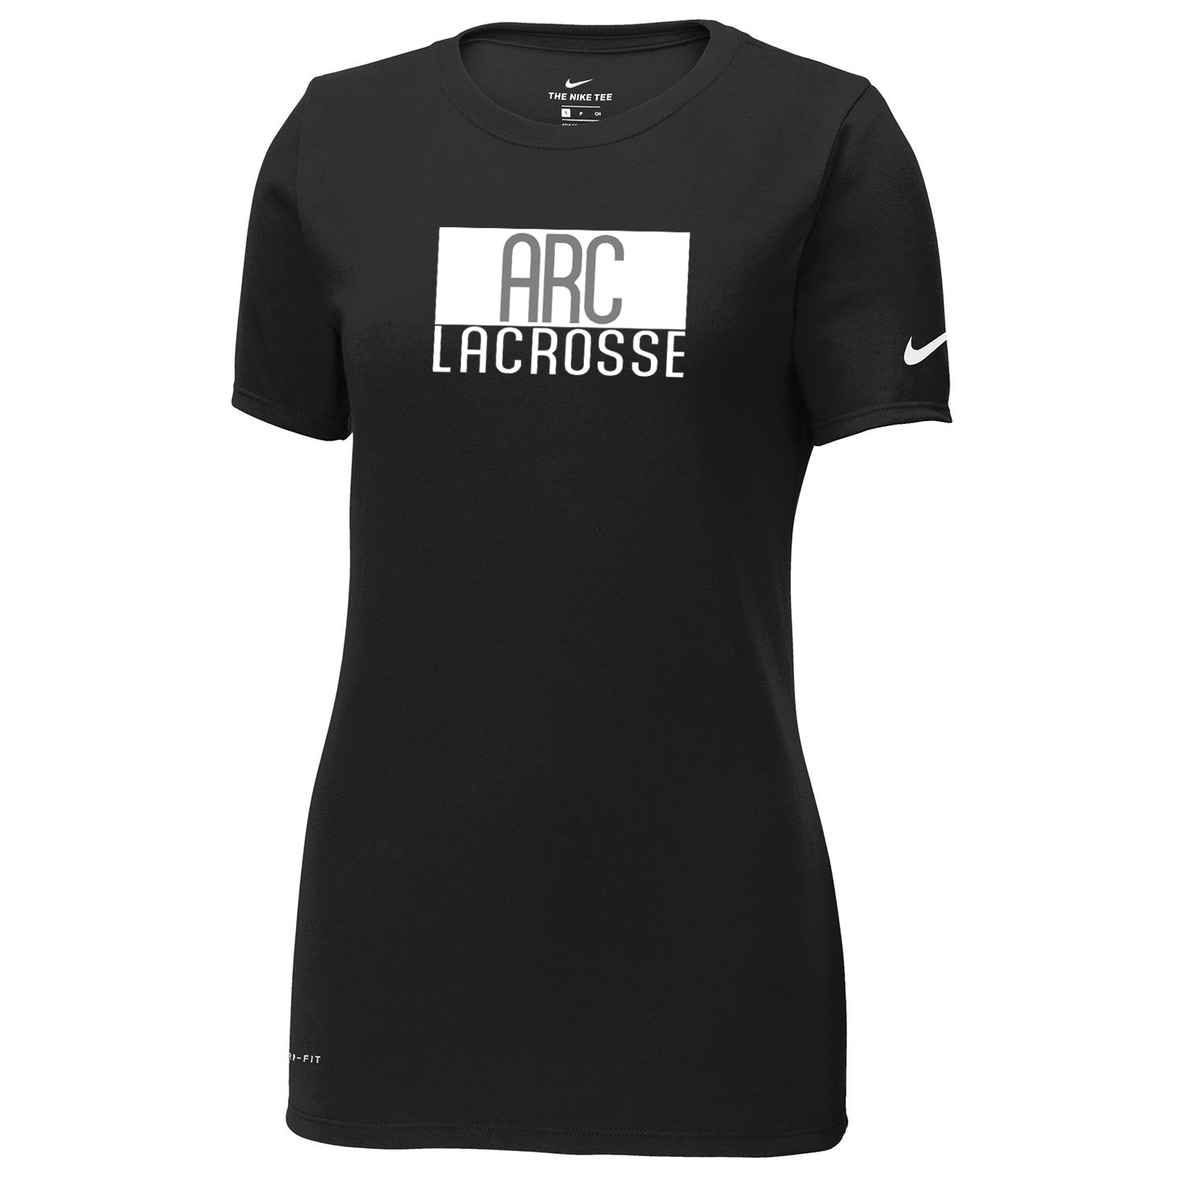 Arc Lacrosse Club Nike Ladies Dri-FIT Tee